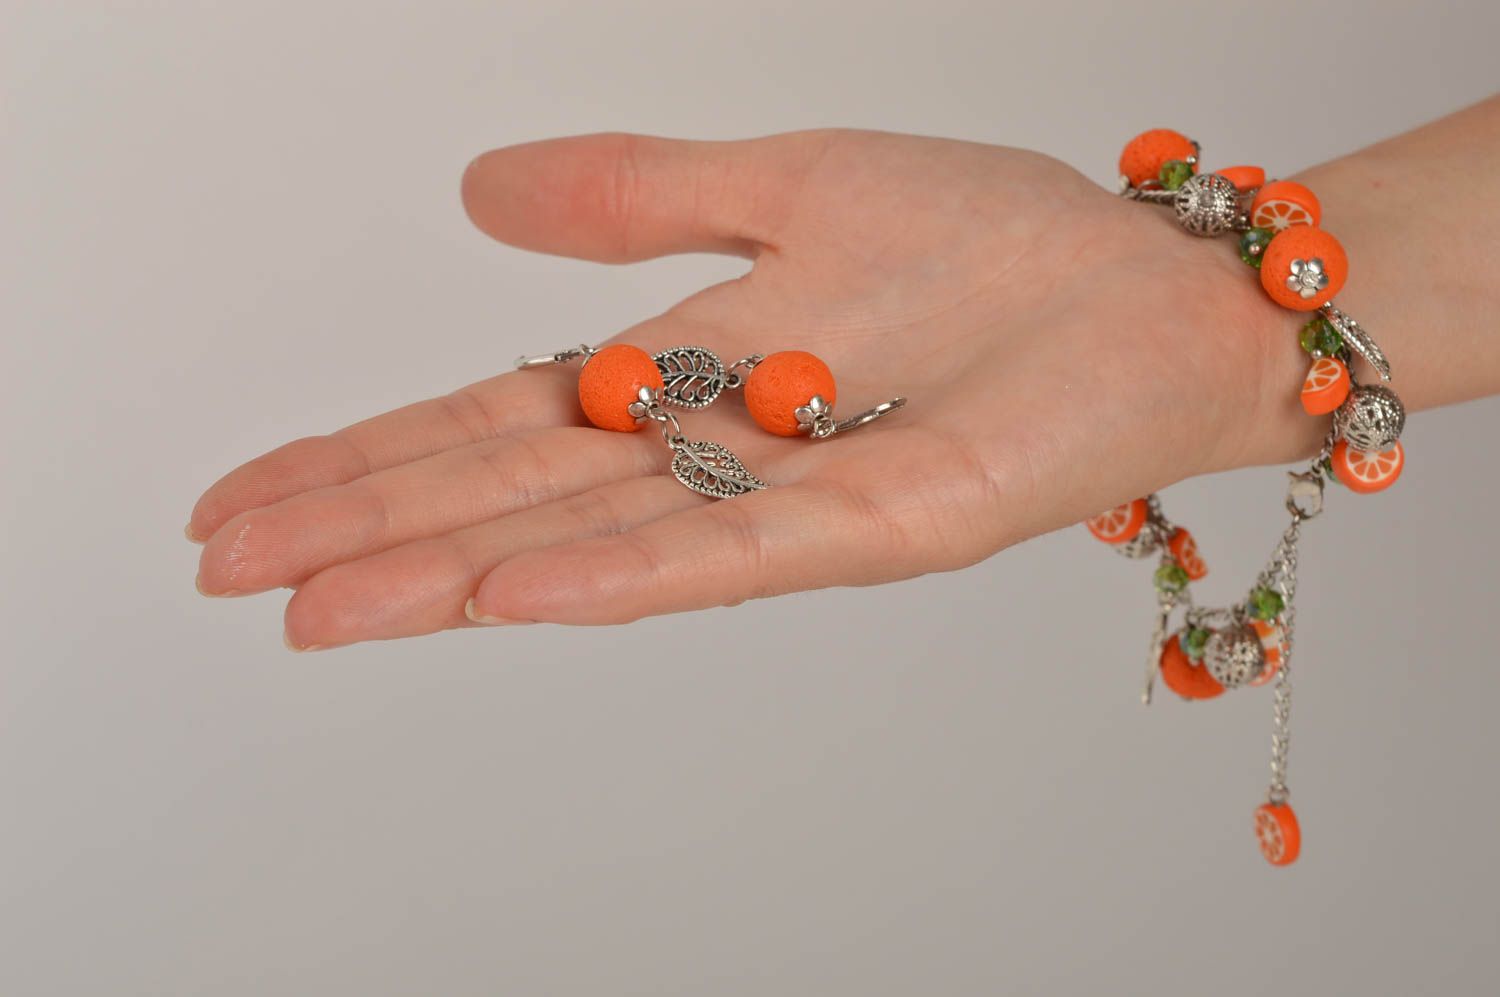 Wrist bracelet fashion earrings polymer clay citrus jewelry women jewelry photo 2